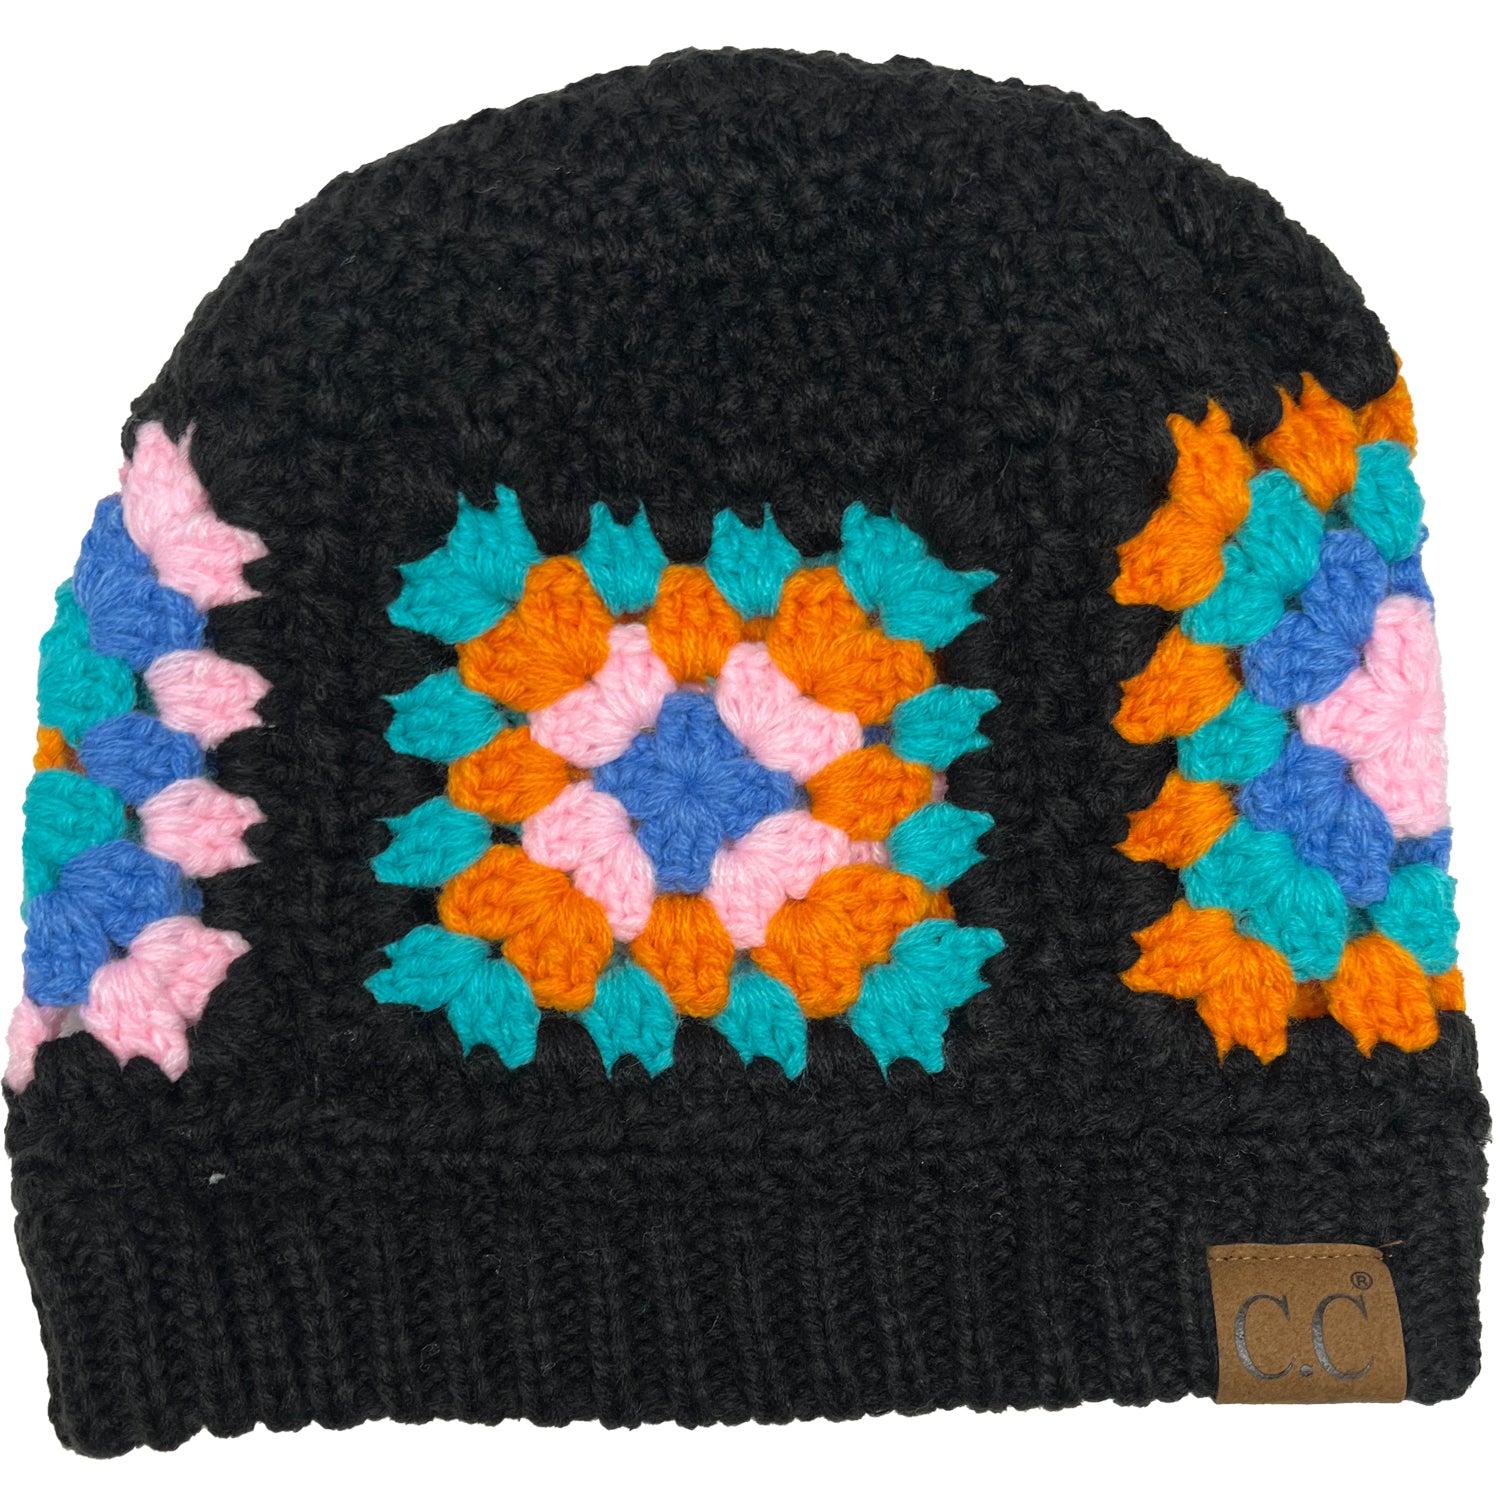 Hat-7393 C.C Hand Crocheted Beanie-Black